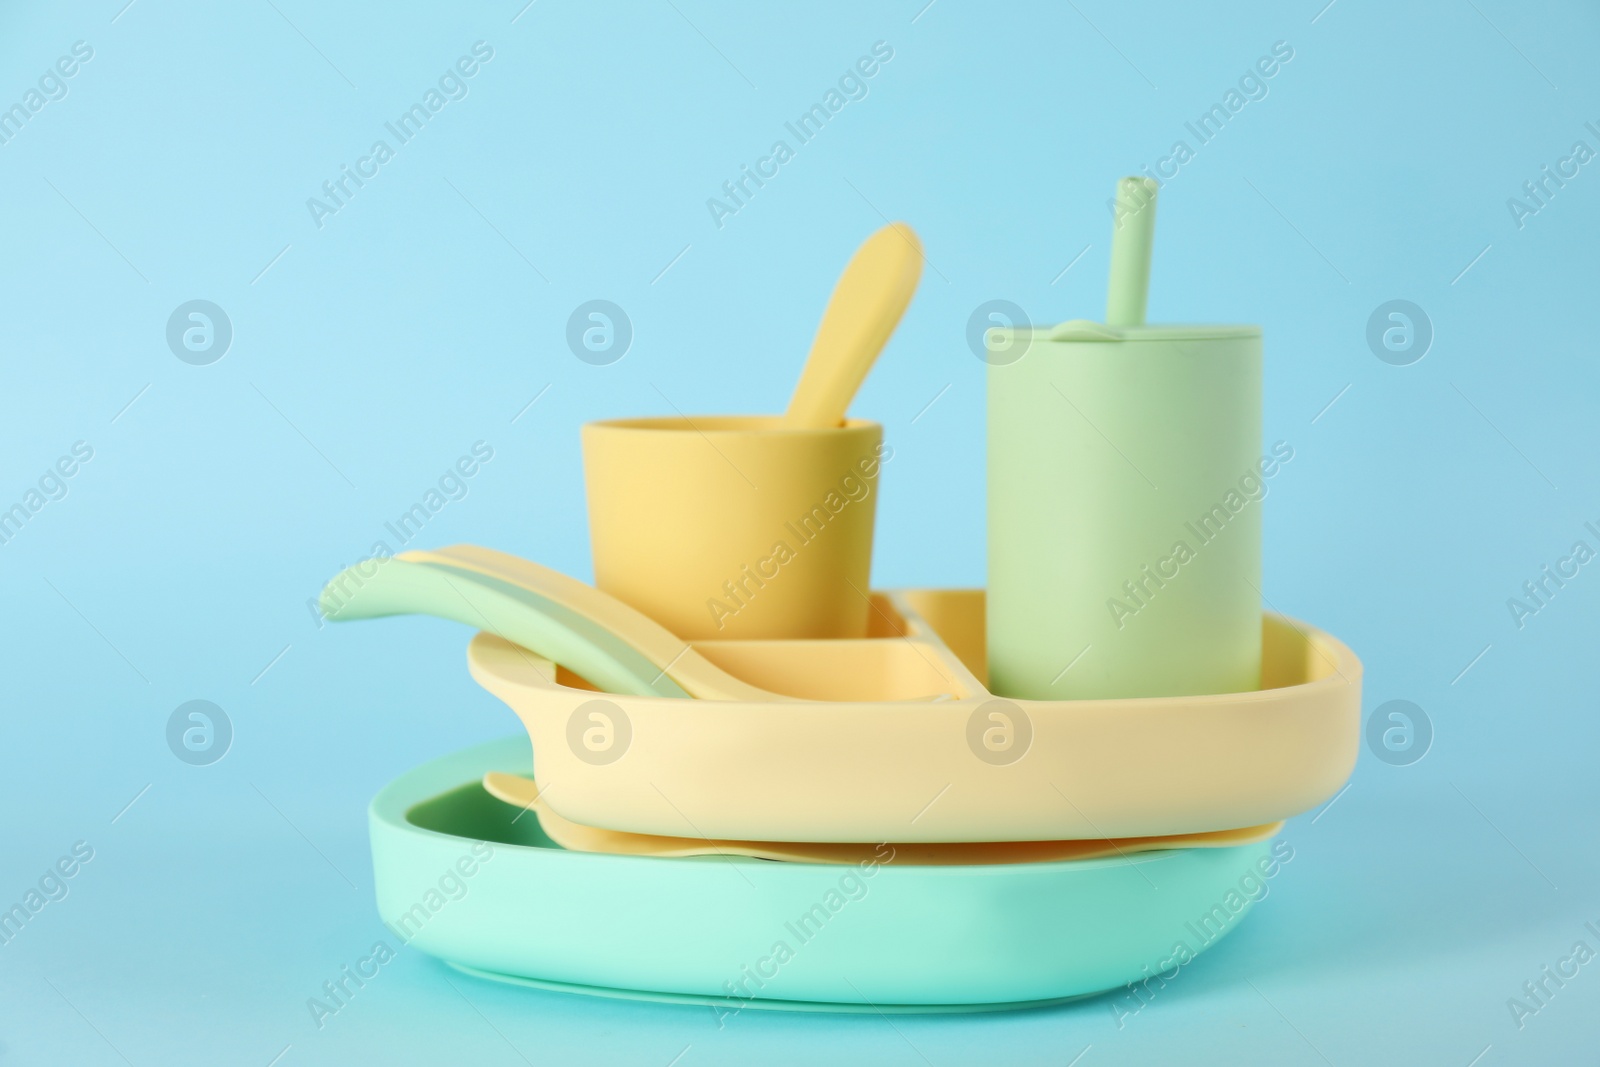 Photo of Set of plastic dishware on light blue background. Serving baby food